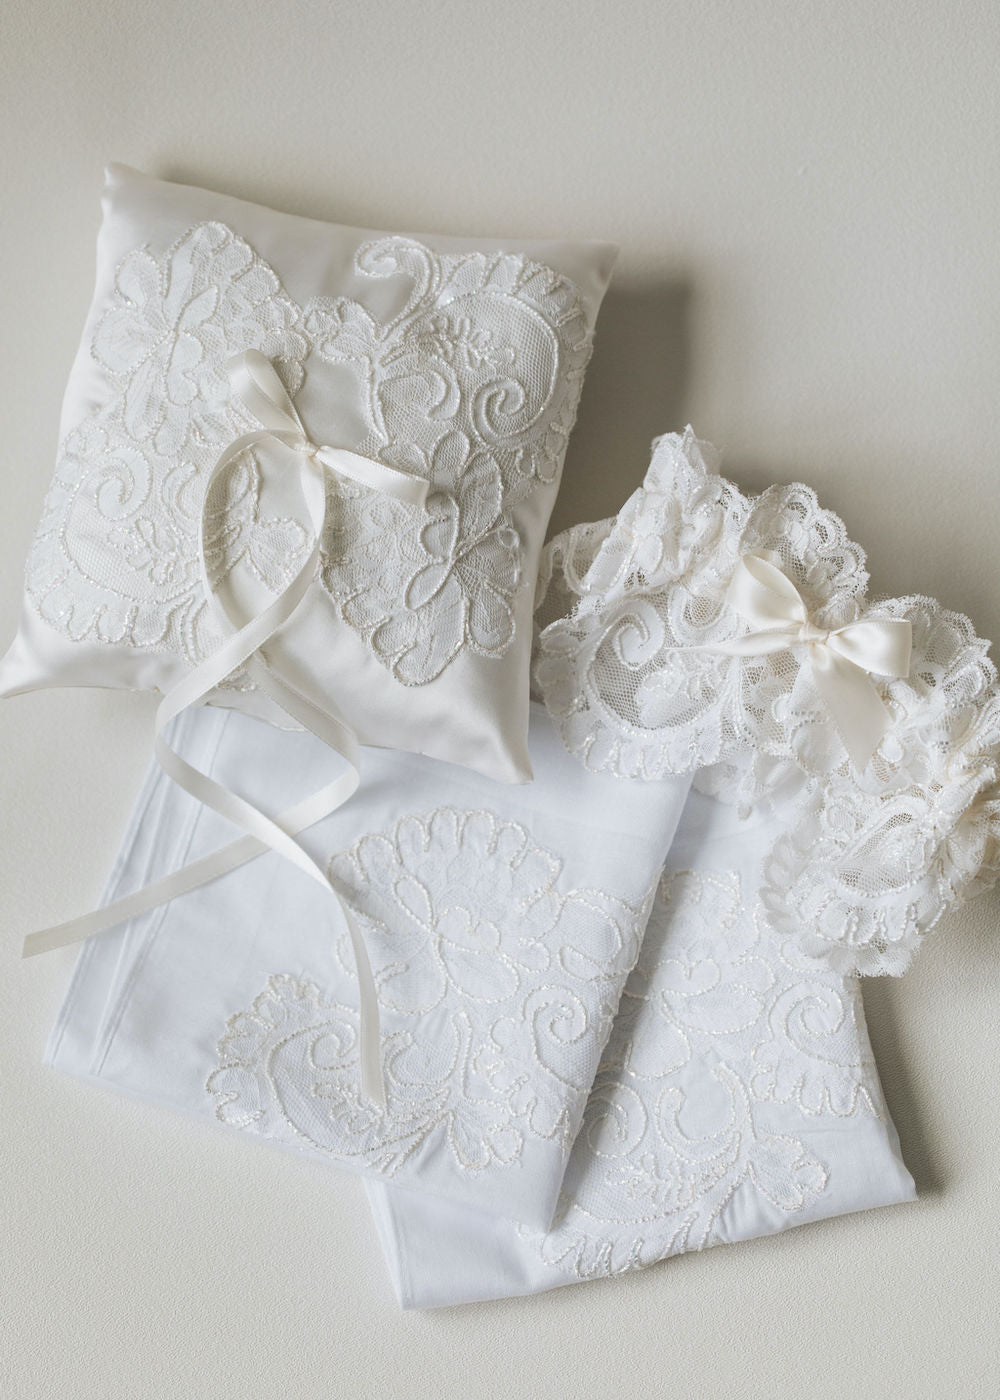 How To Repurpose Mother's Wedding Dress: Garter Set, Ring Pillow